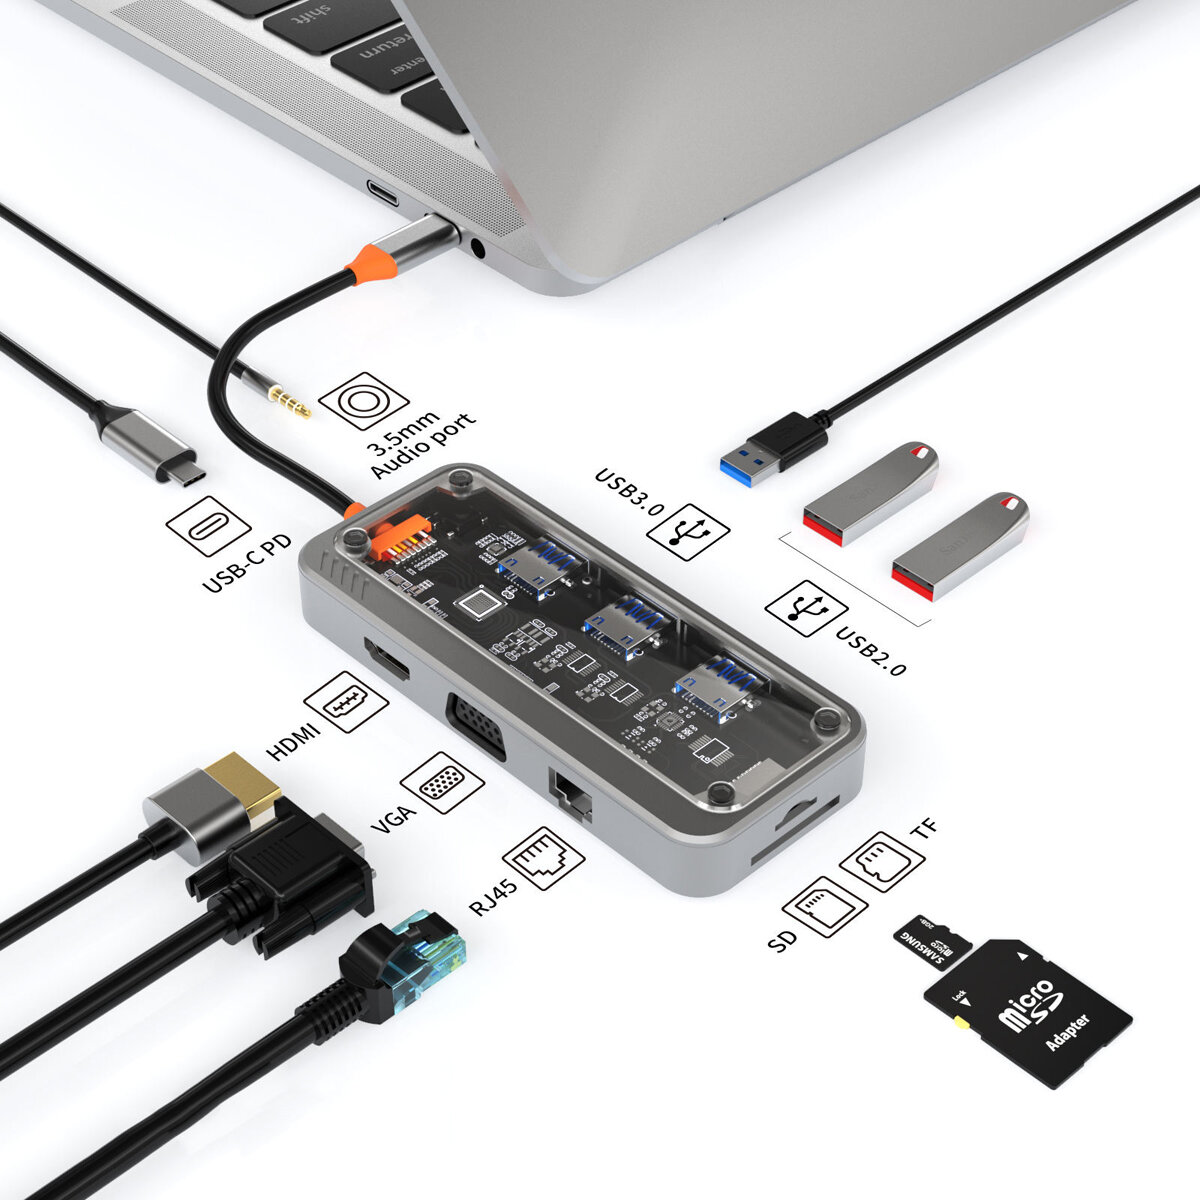 

Basix USB C Hub 10 in 1 Type-C to PD HDMI USB3.0 USB2.0*2 SD TF RJ45 VGA AUDIO3.5mm Audio